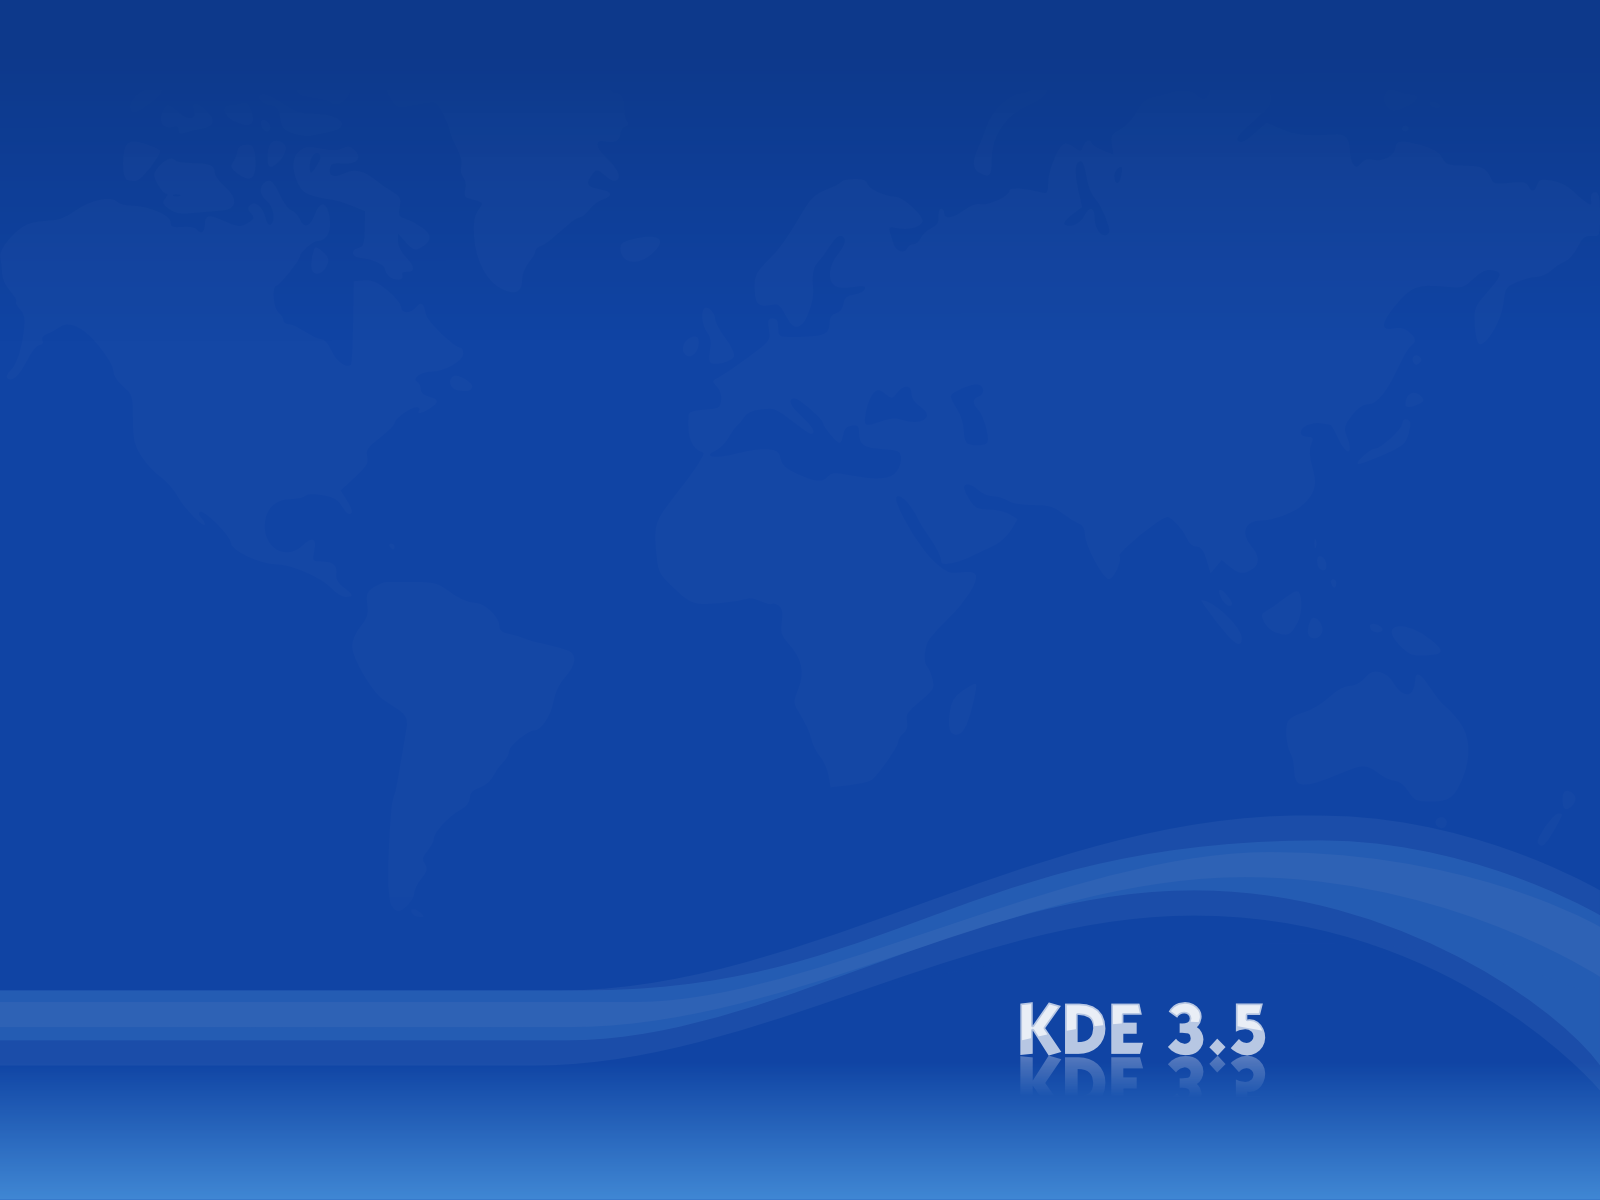 template/.kde/share/apps/kstyle/themes/original/wallpapers/desktop/KDE34.png